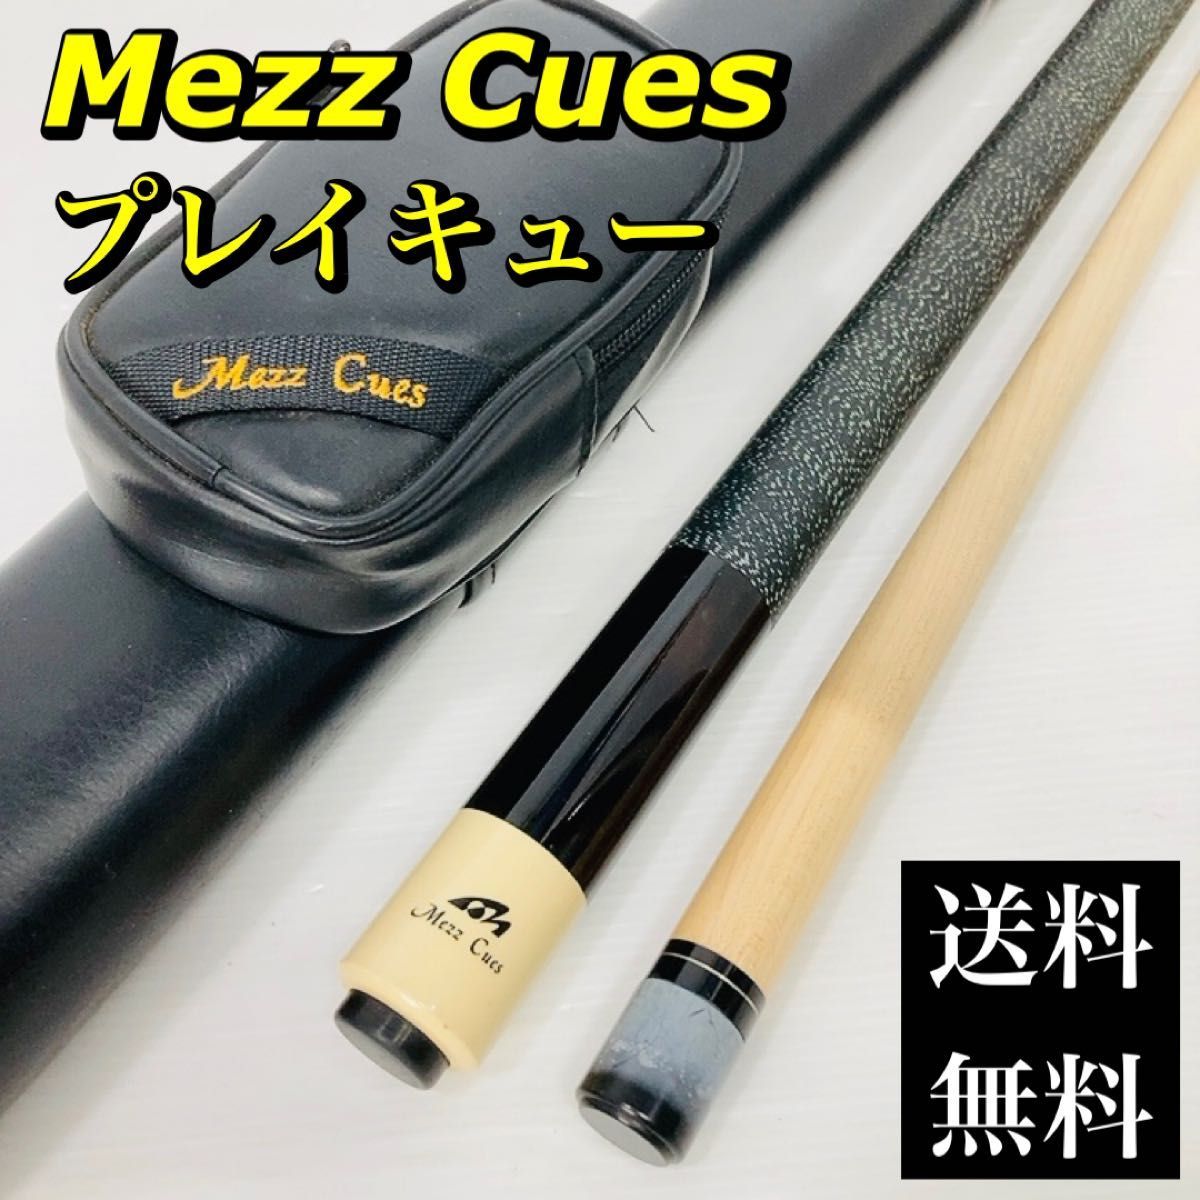 【Mezz】メッヅ　ビリヤードキュー　プレイキュー　糸巻き　1B1Sケース　ビンテージ　メッズ　MEZZ Cues